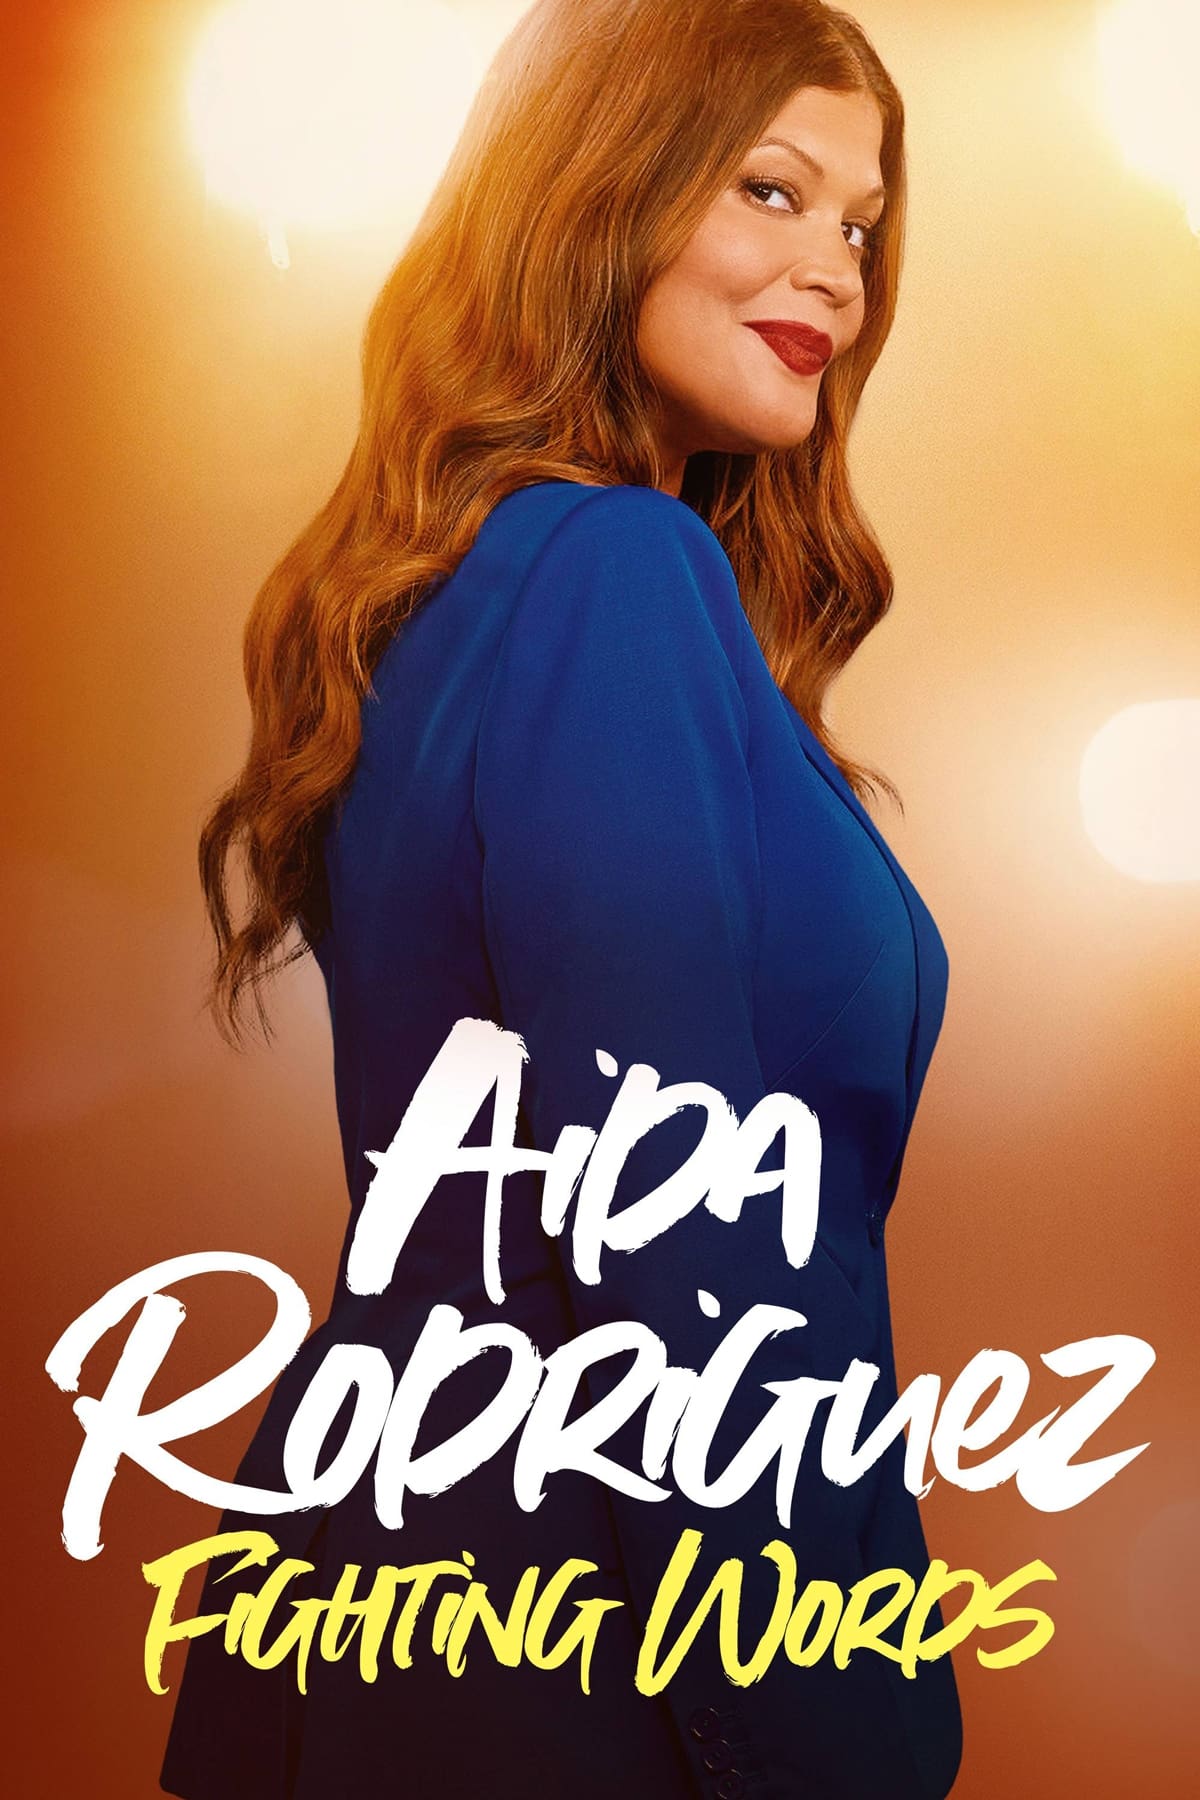 Aida Rodriguez: Fighting Words (2021)